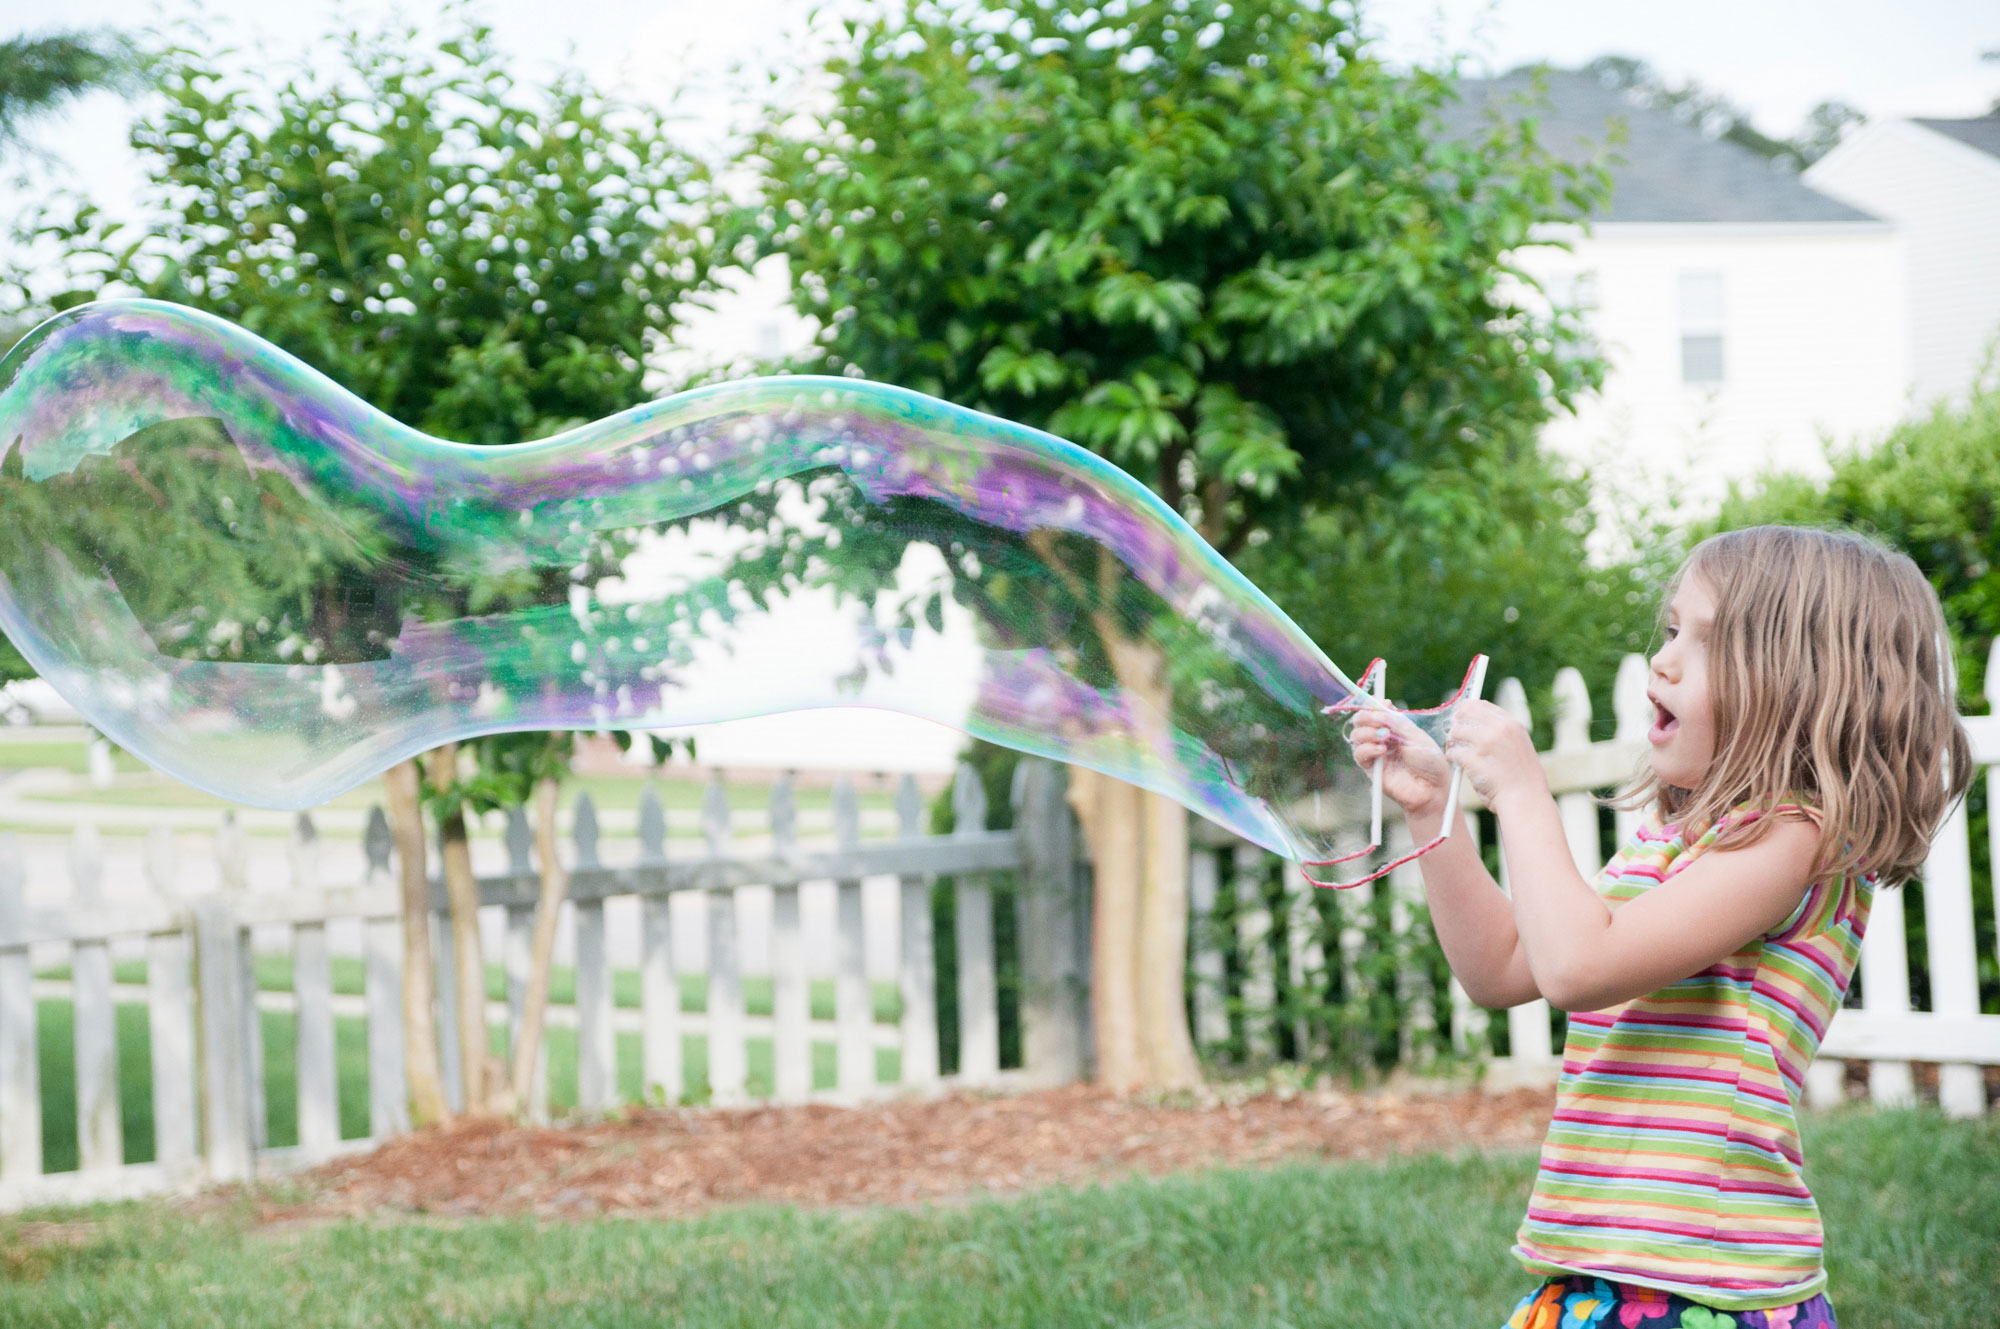 Little girl blowing giant bubbles.